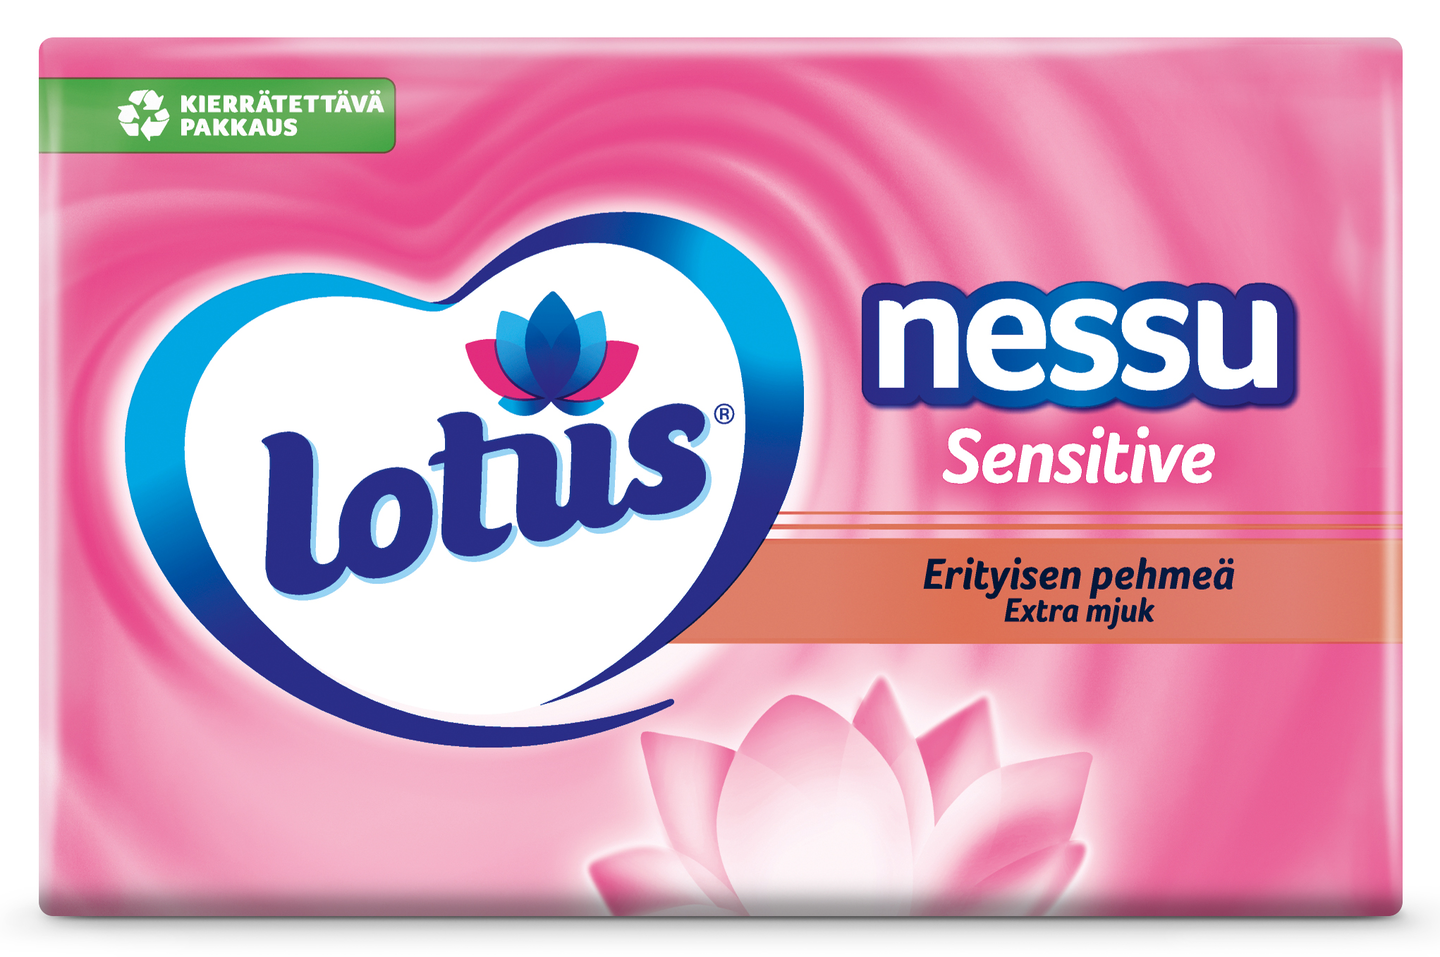 Lotus Nessu Sensitive nenäliina 6x10kpl taskupakkaus